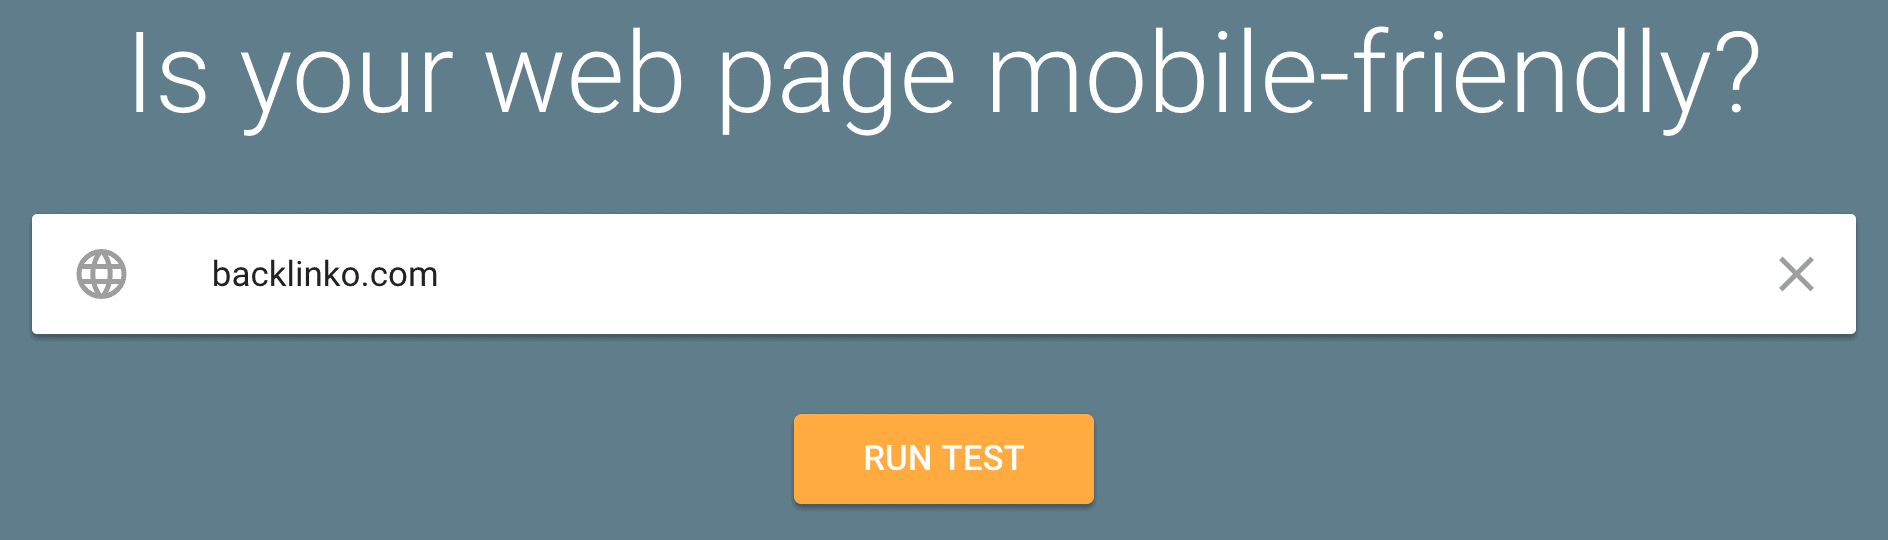 Mobile-Friendly Test – Enter site